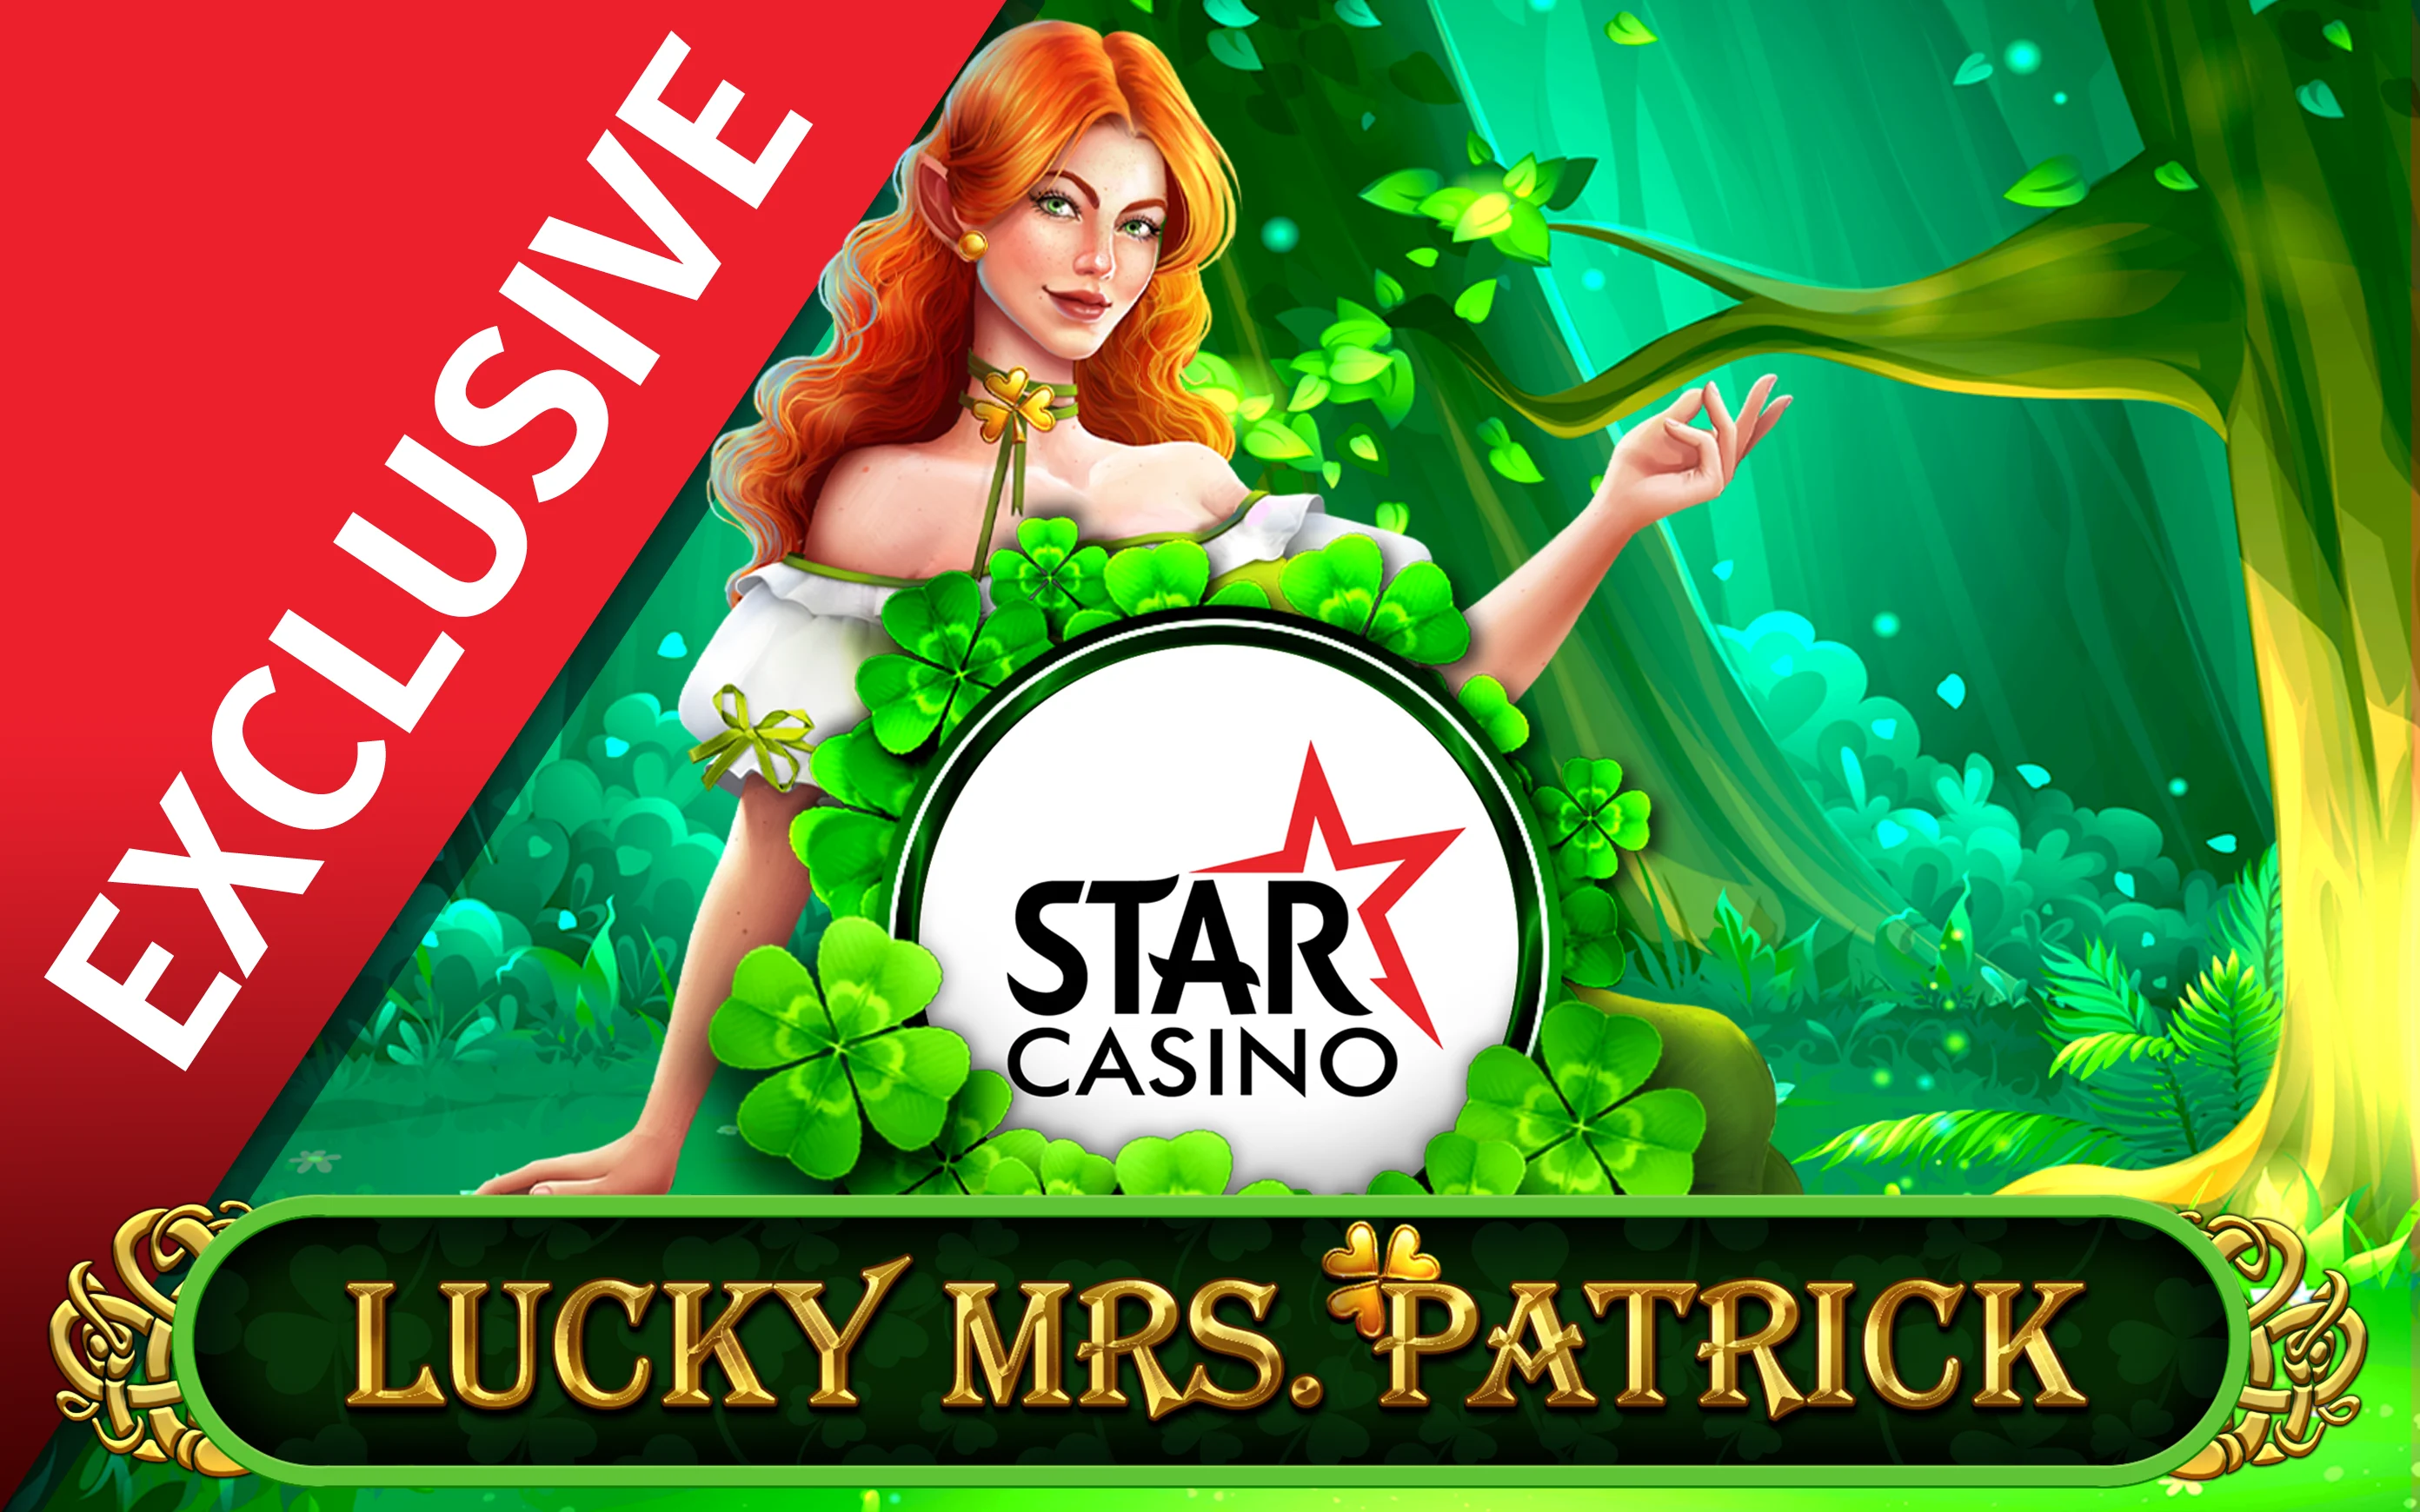 Joacă Starcasino Lucky Mrs Patrick în cazinoul online Starcasino.be